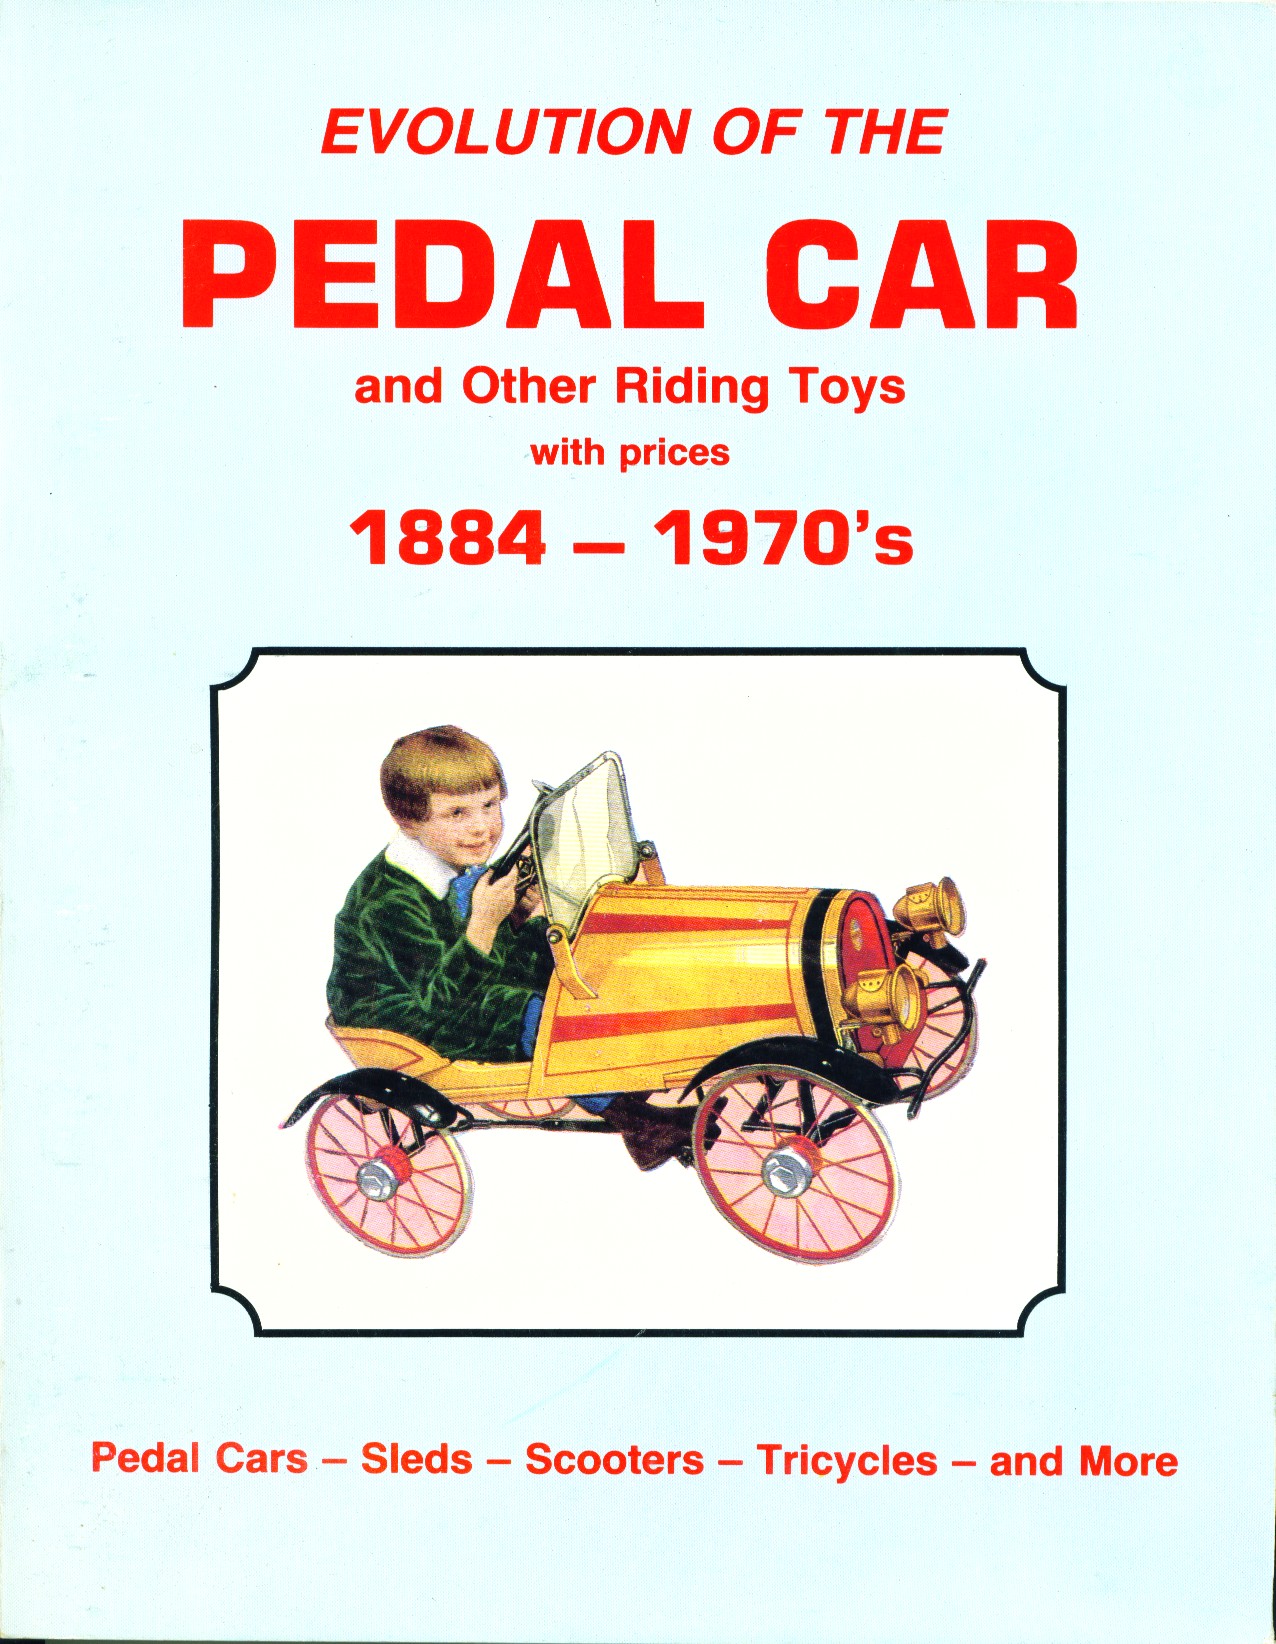 Evolution of pedal cars